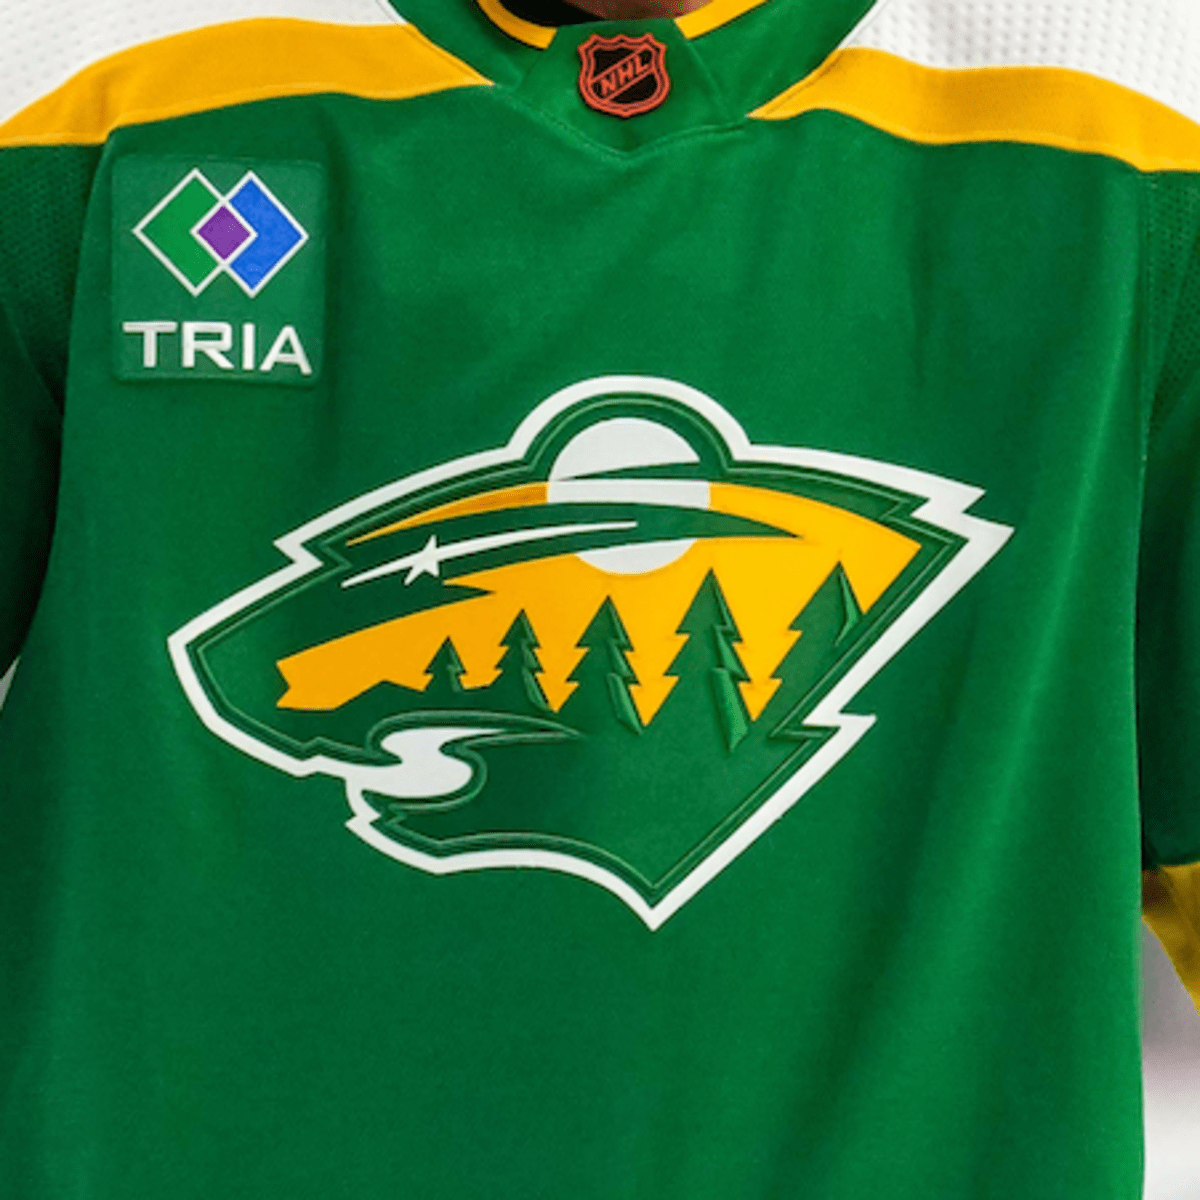 Minnesota Wild Bringing Back Green and Gold as Alternate Uniform